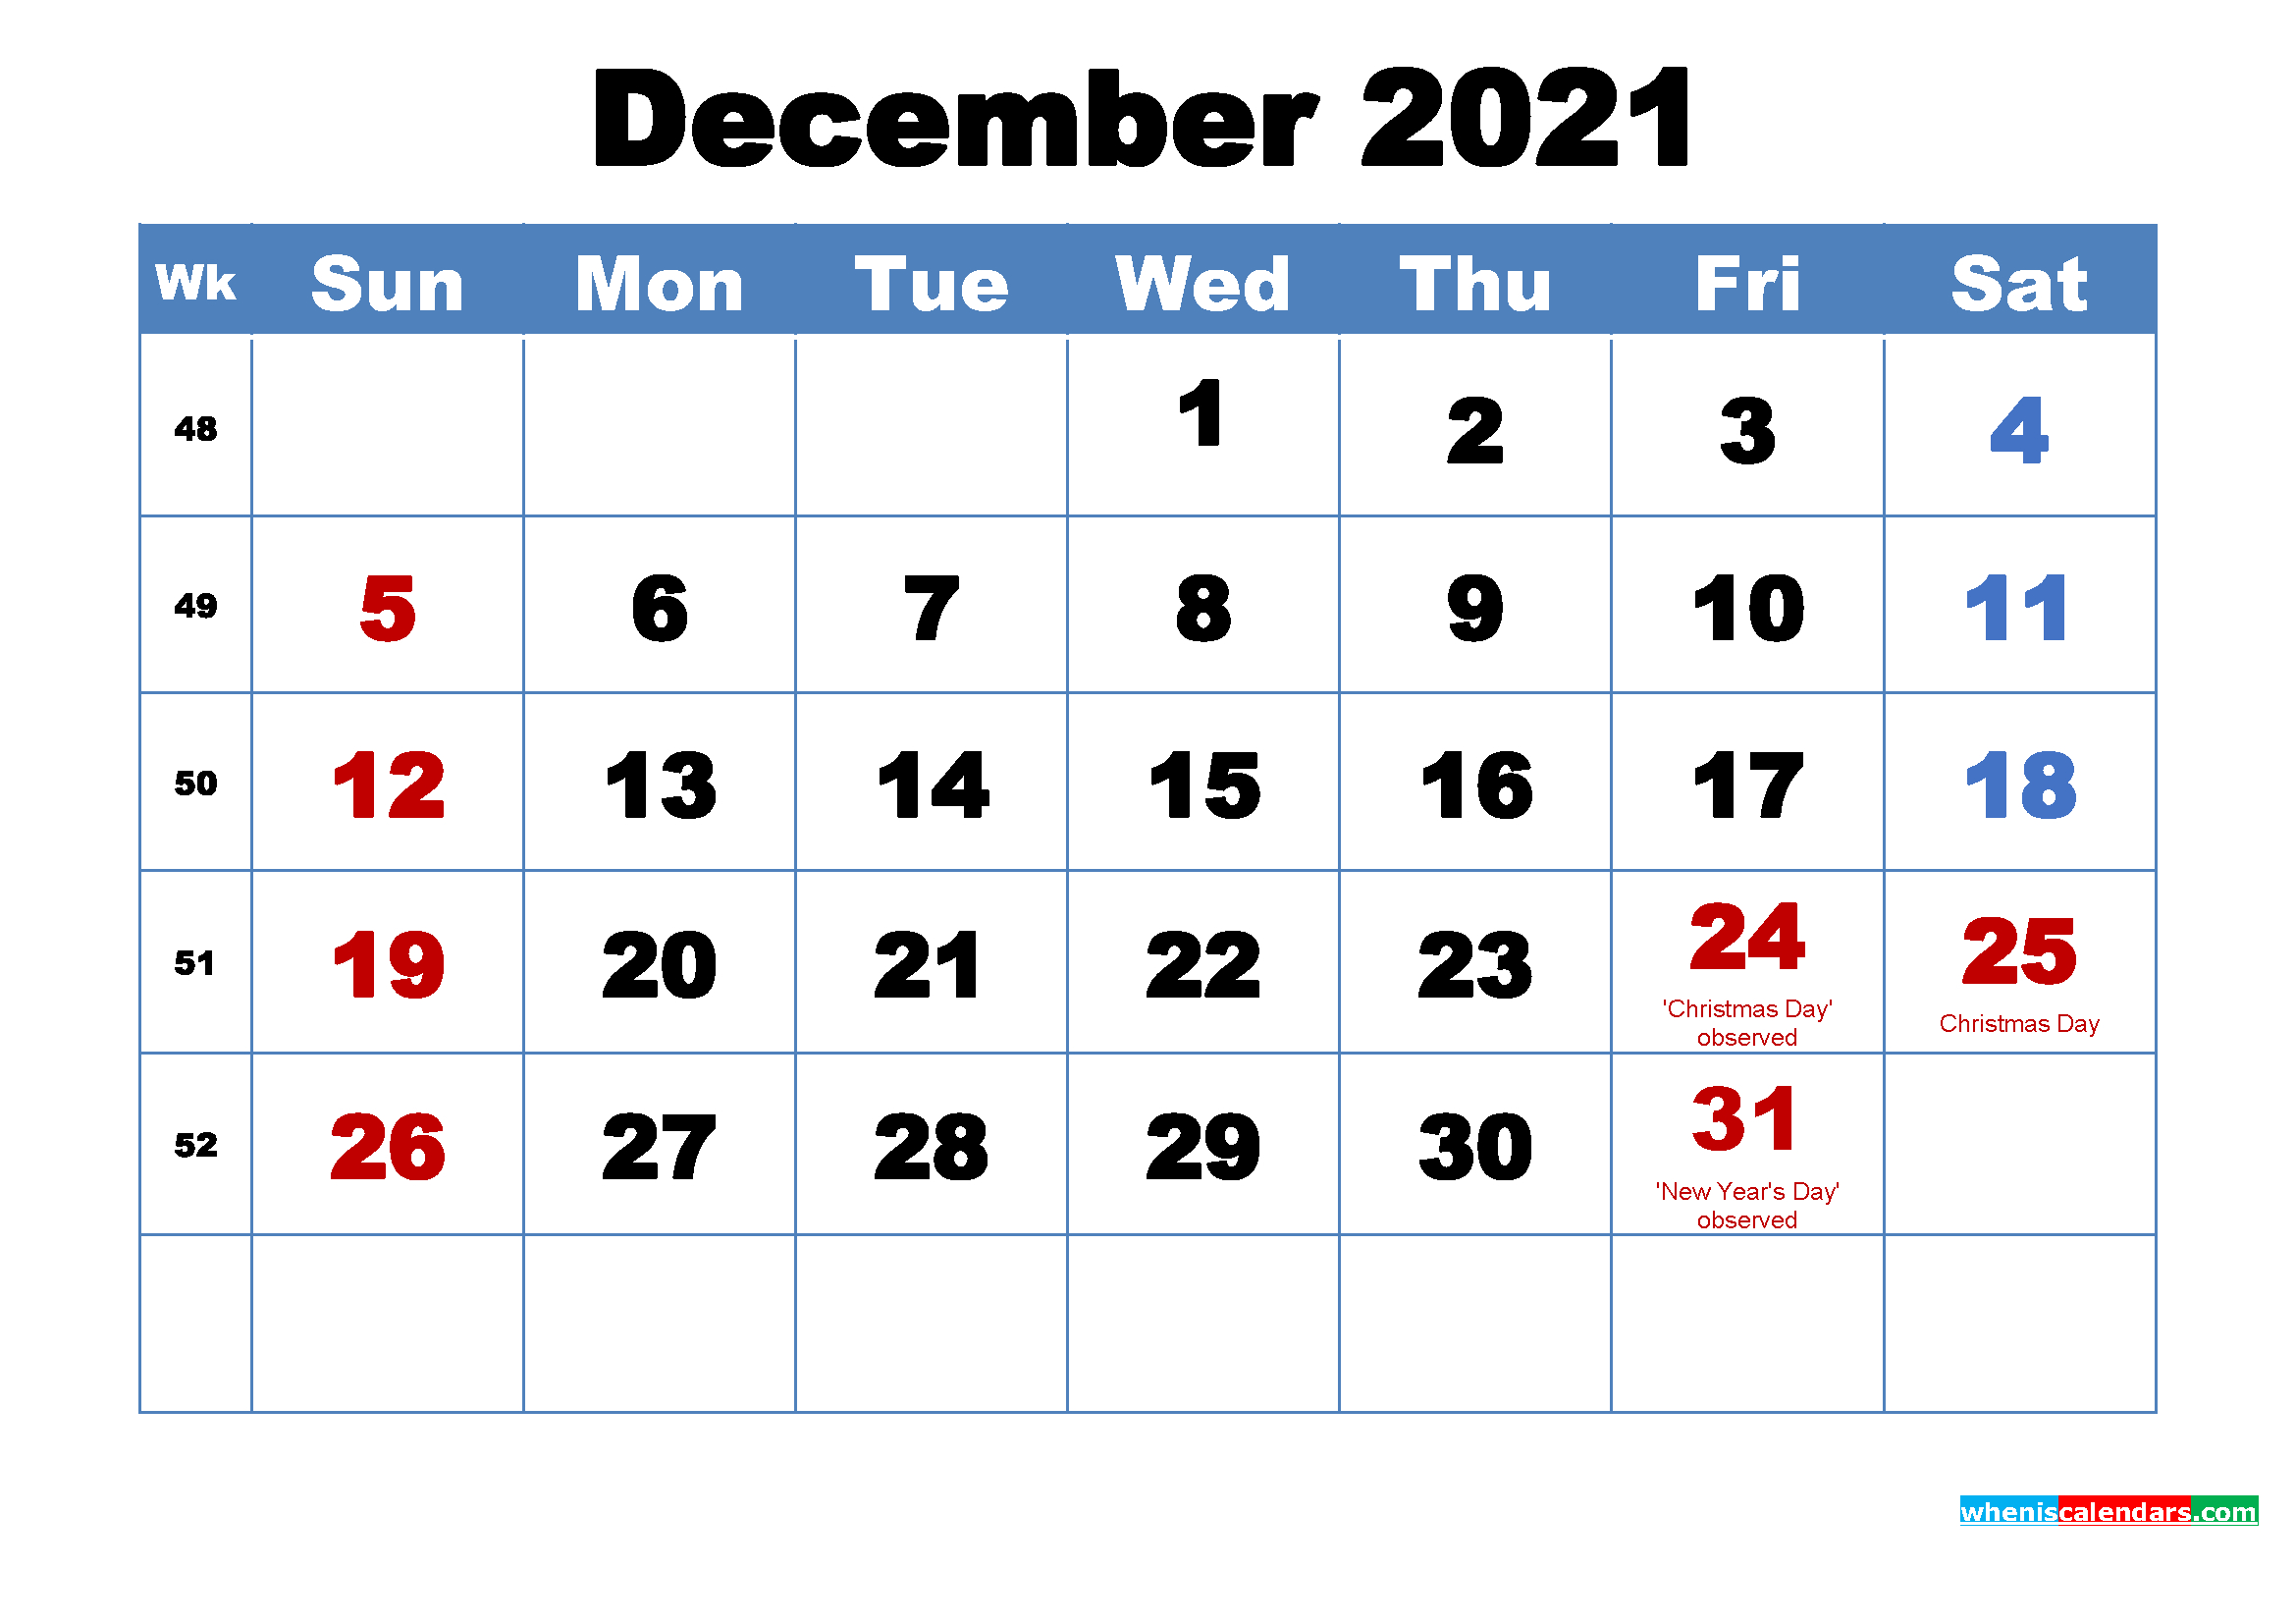 December 2021 Calendar Wallpaper Free Download-December 2021 Calendar Printable On 8X10